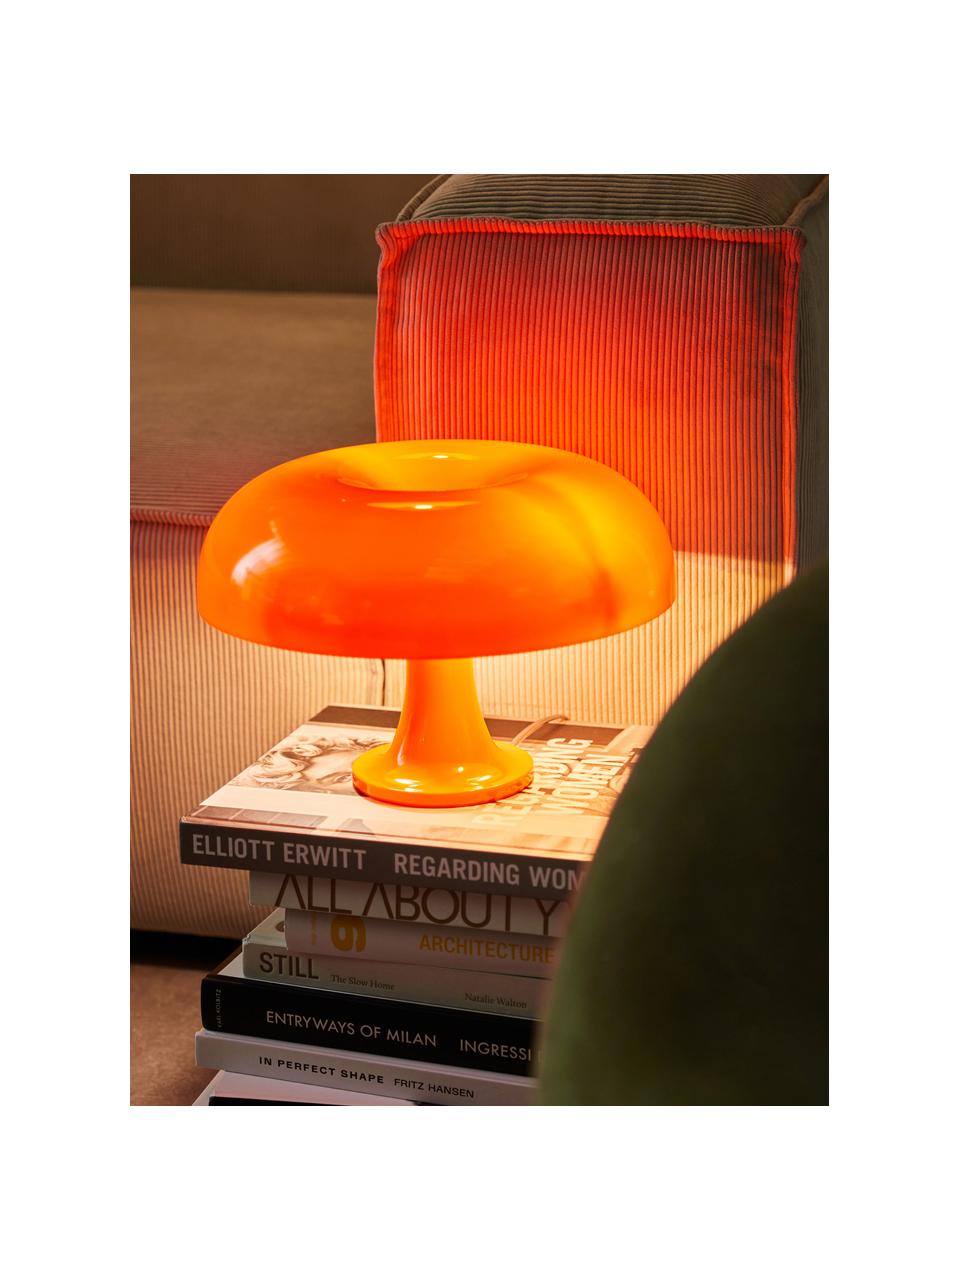 Kleine tafellamp Nessino, Lamp: polycarbonaat, Oranje, Ø 32 x H 22 cm